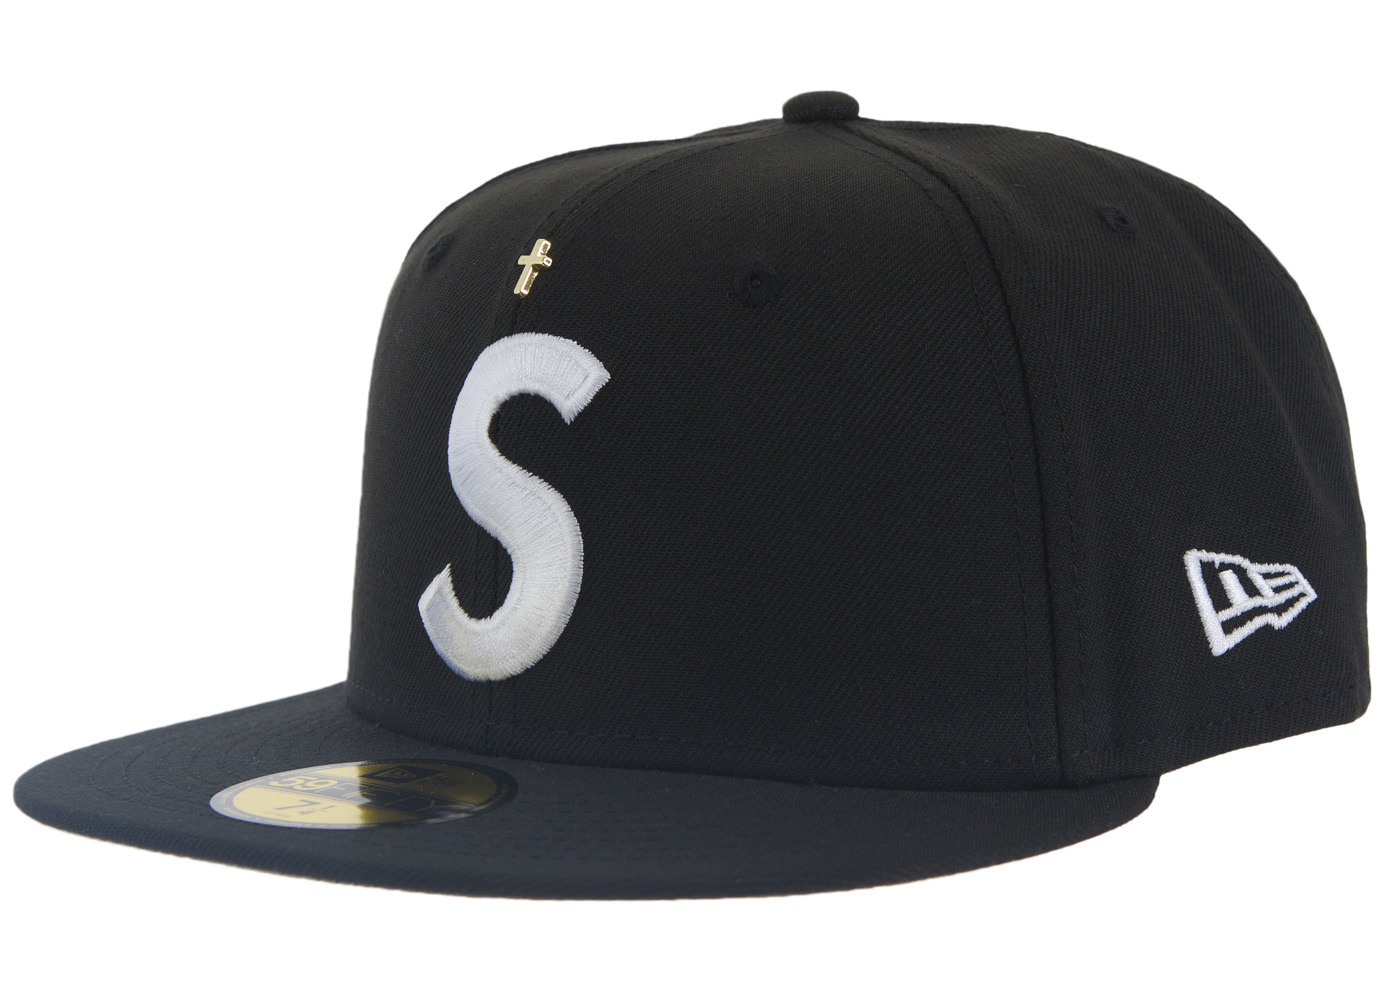 Supreme Gold Cross S Logo New Era Fitted Hat Black